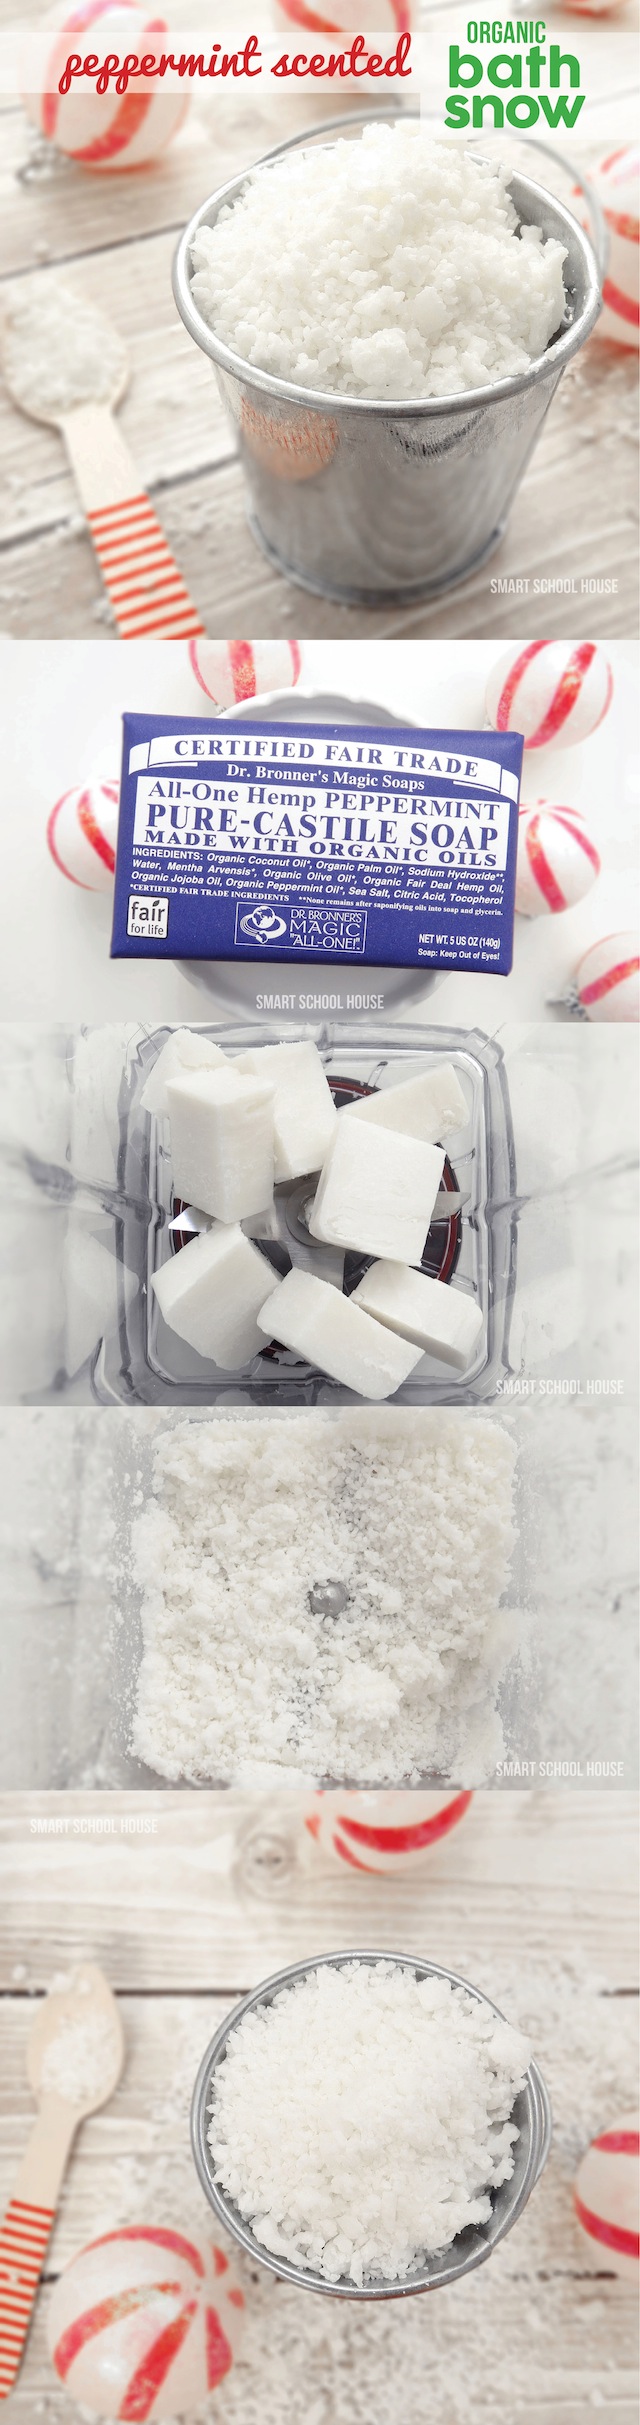 How to make Organic Peppermint Bath Snow